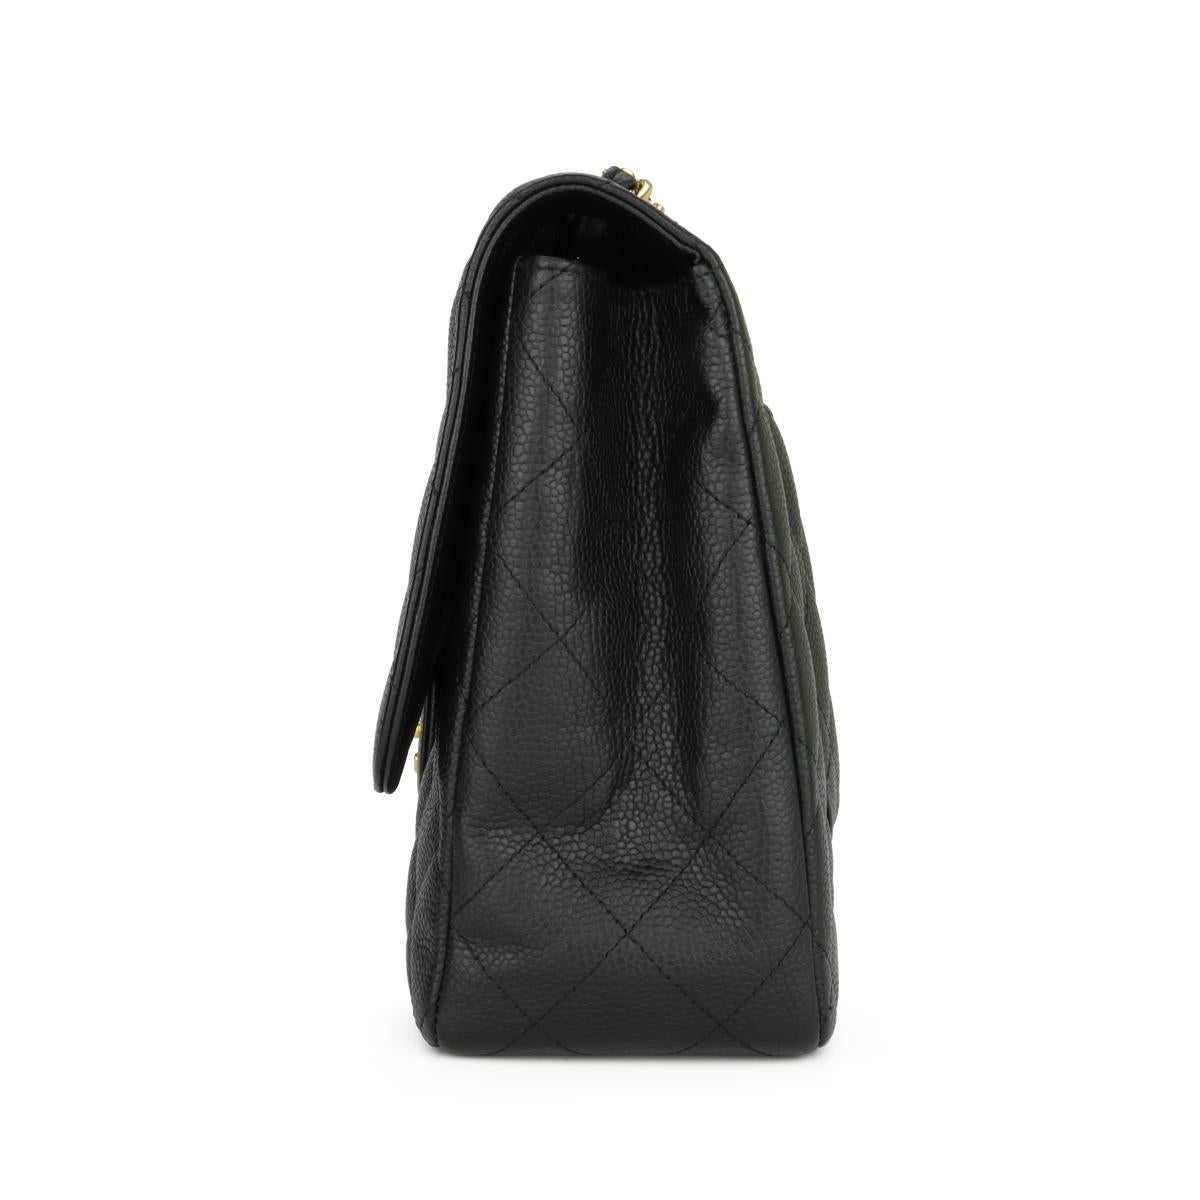 CHANEL Single Flap Jumbo Bag Black Caviar with Gold Hardware 2010 2